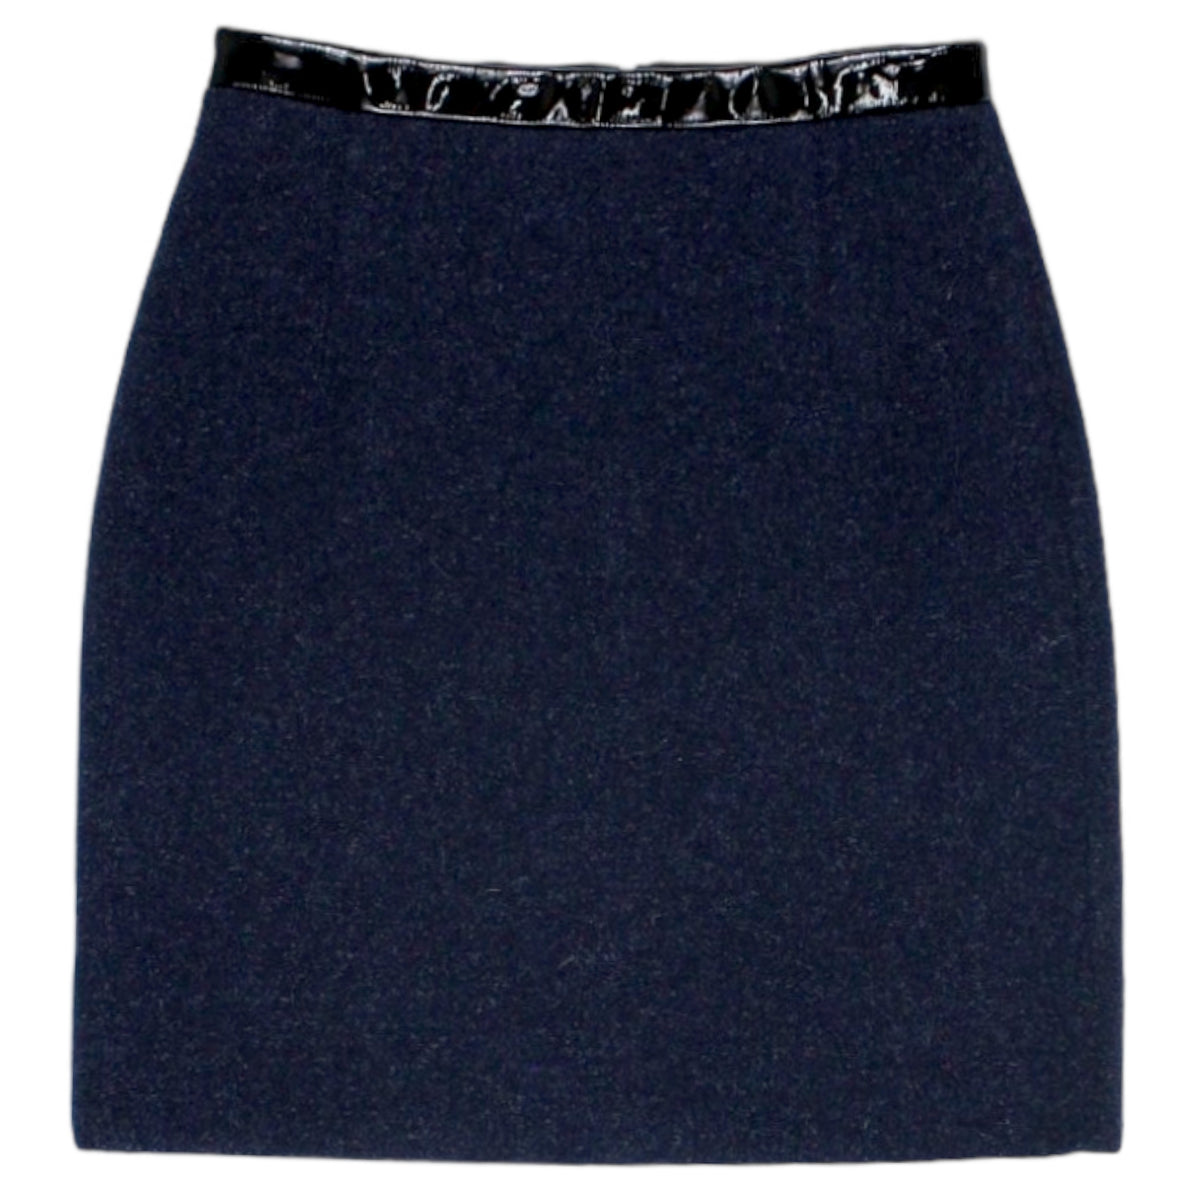 Orla Kiely Bue Flecked Mini Skirt